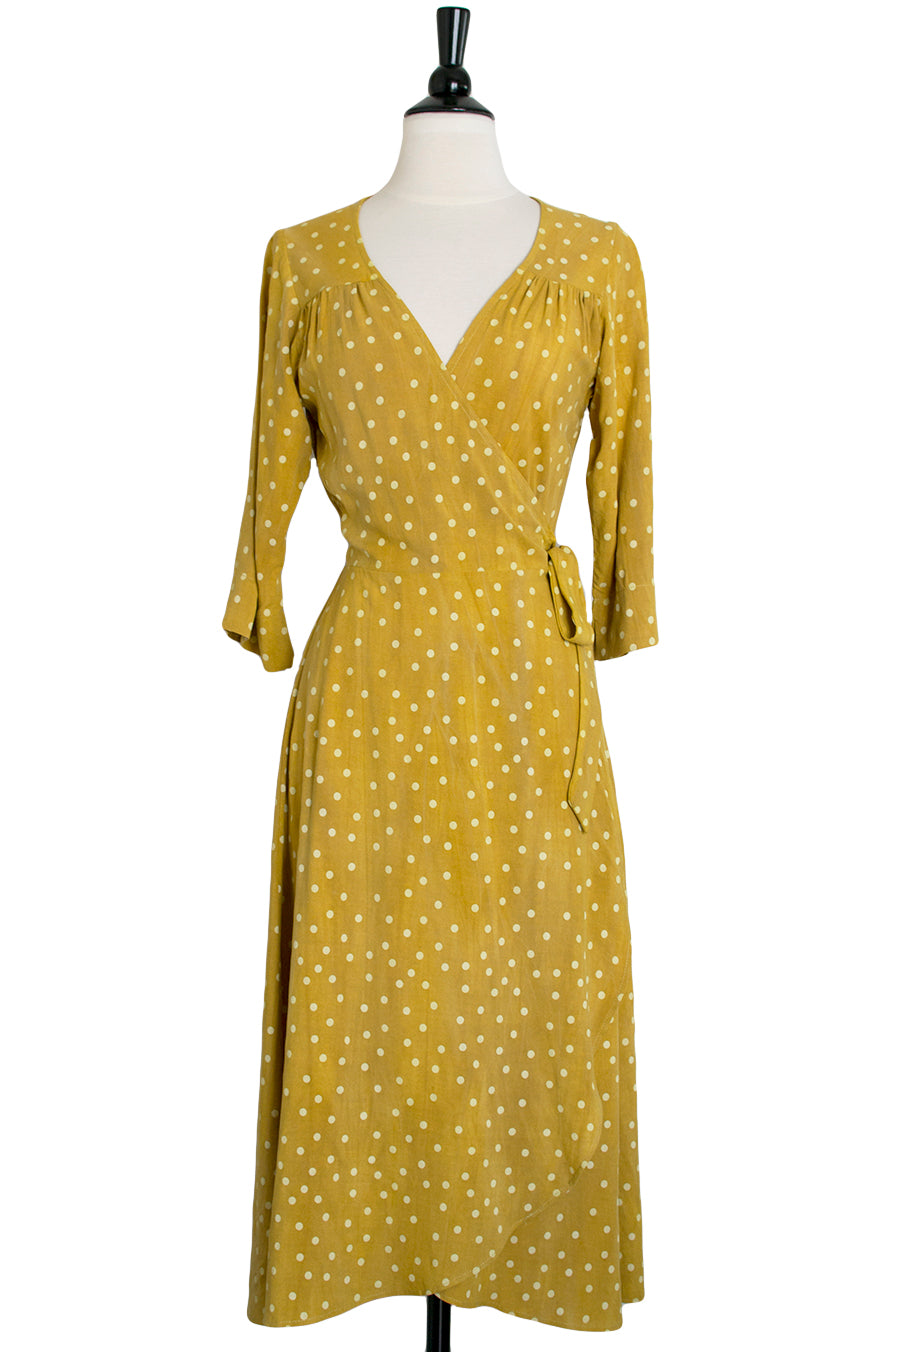 cameo yellow dress